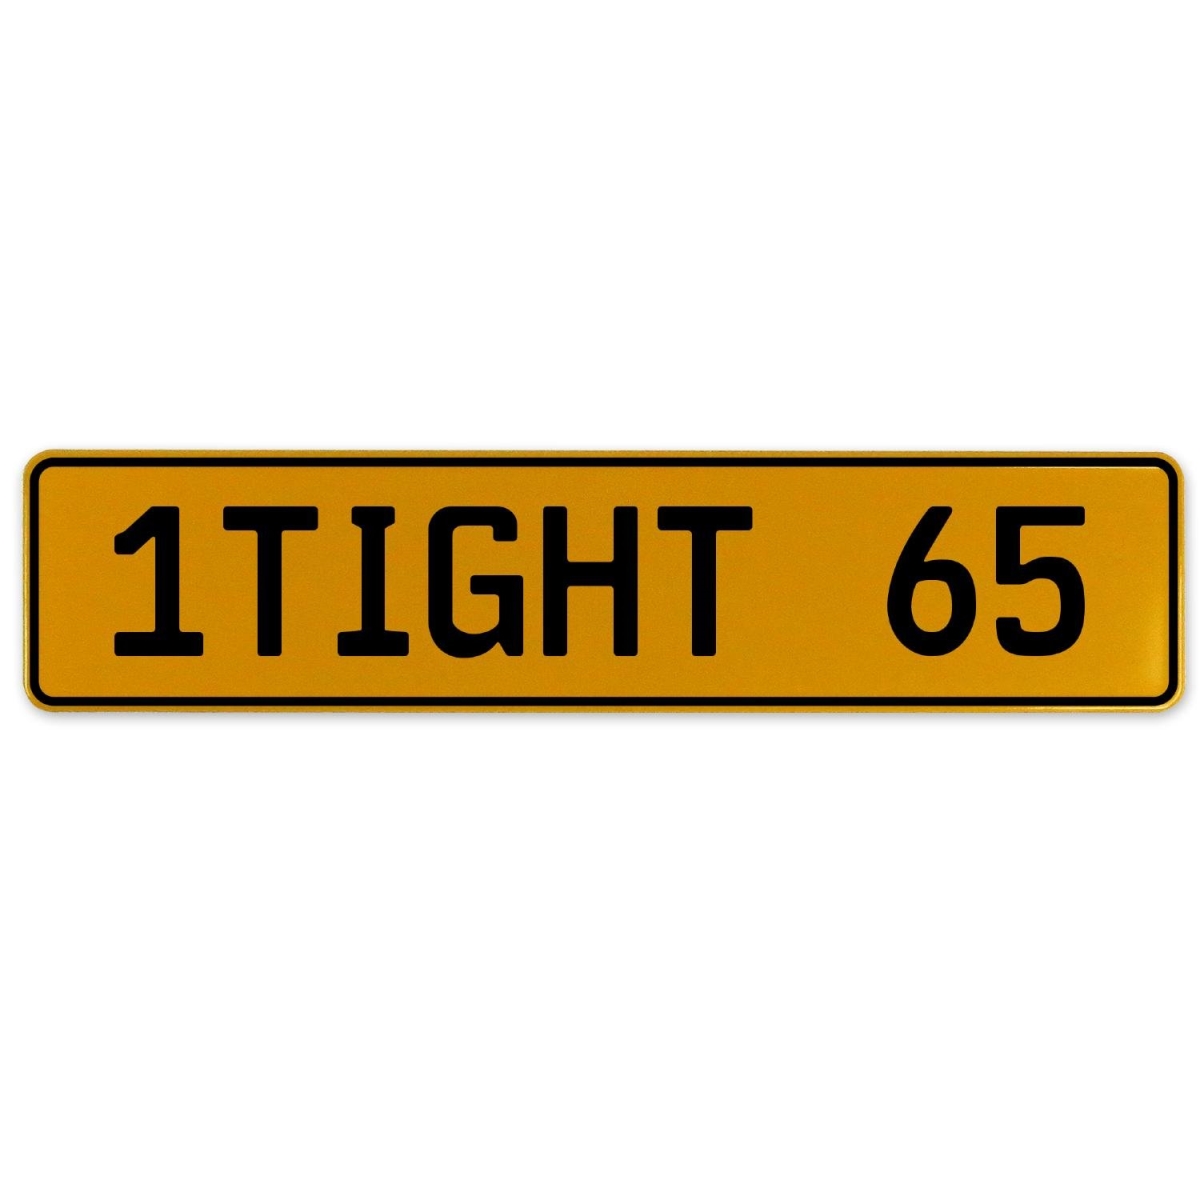 1tight 65 - Yellow Aluminum Street Sign Mancave Euro Plate Name Door Sign Wall